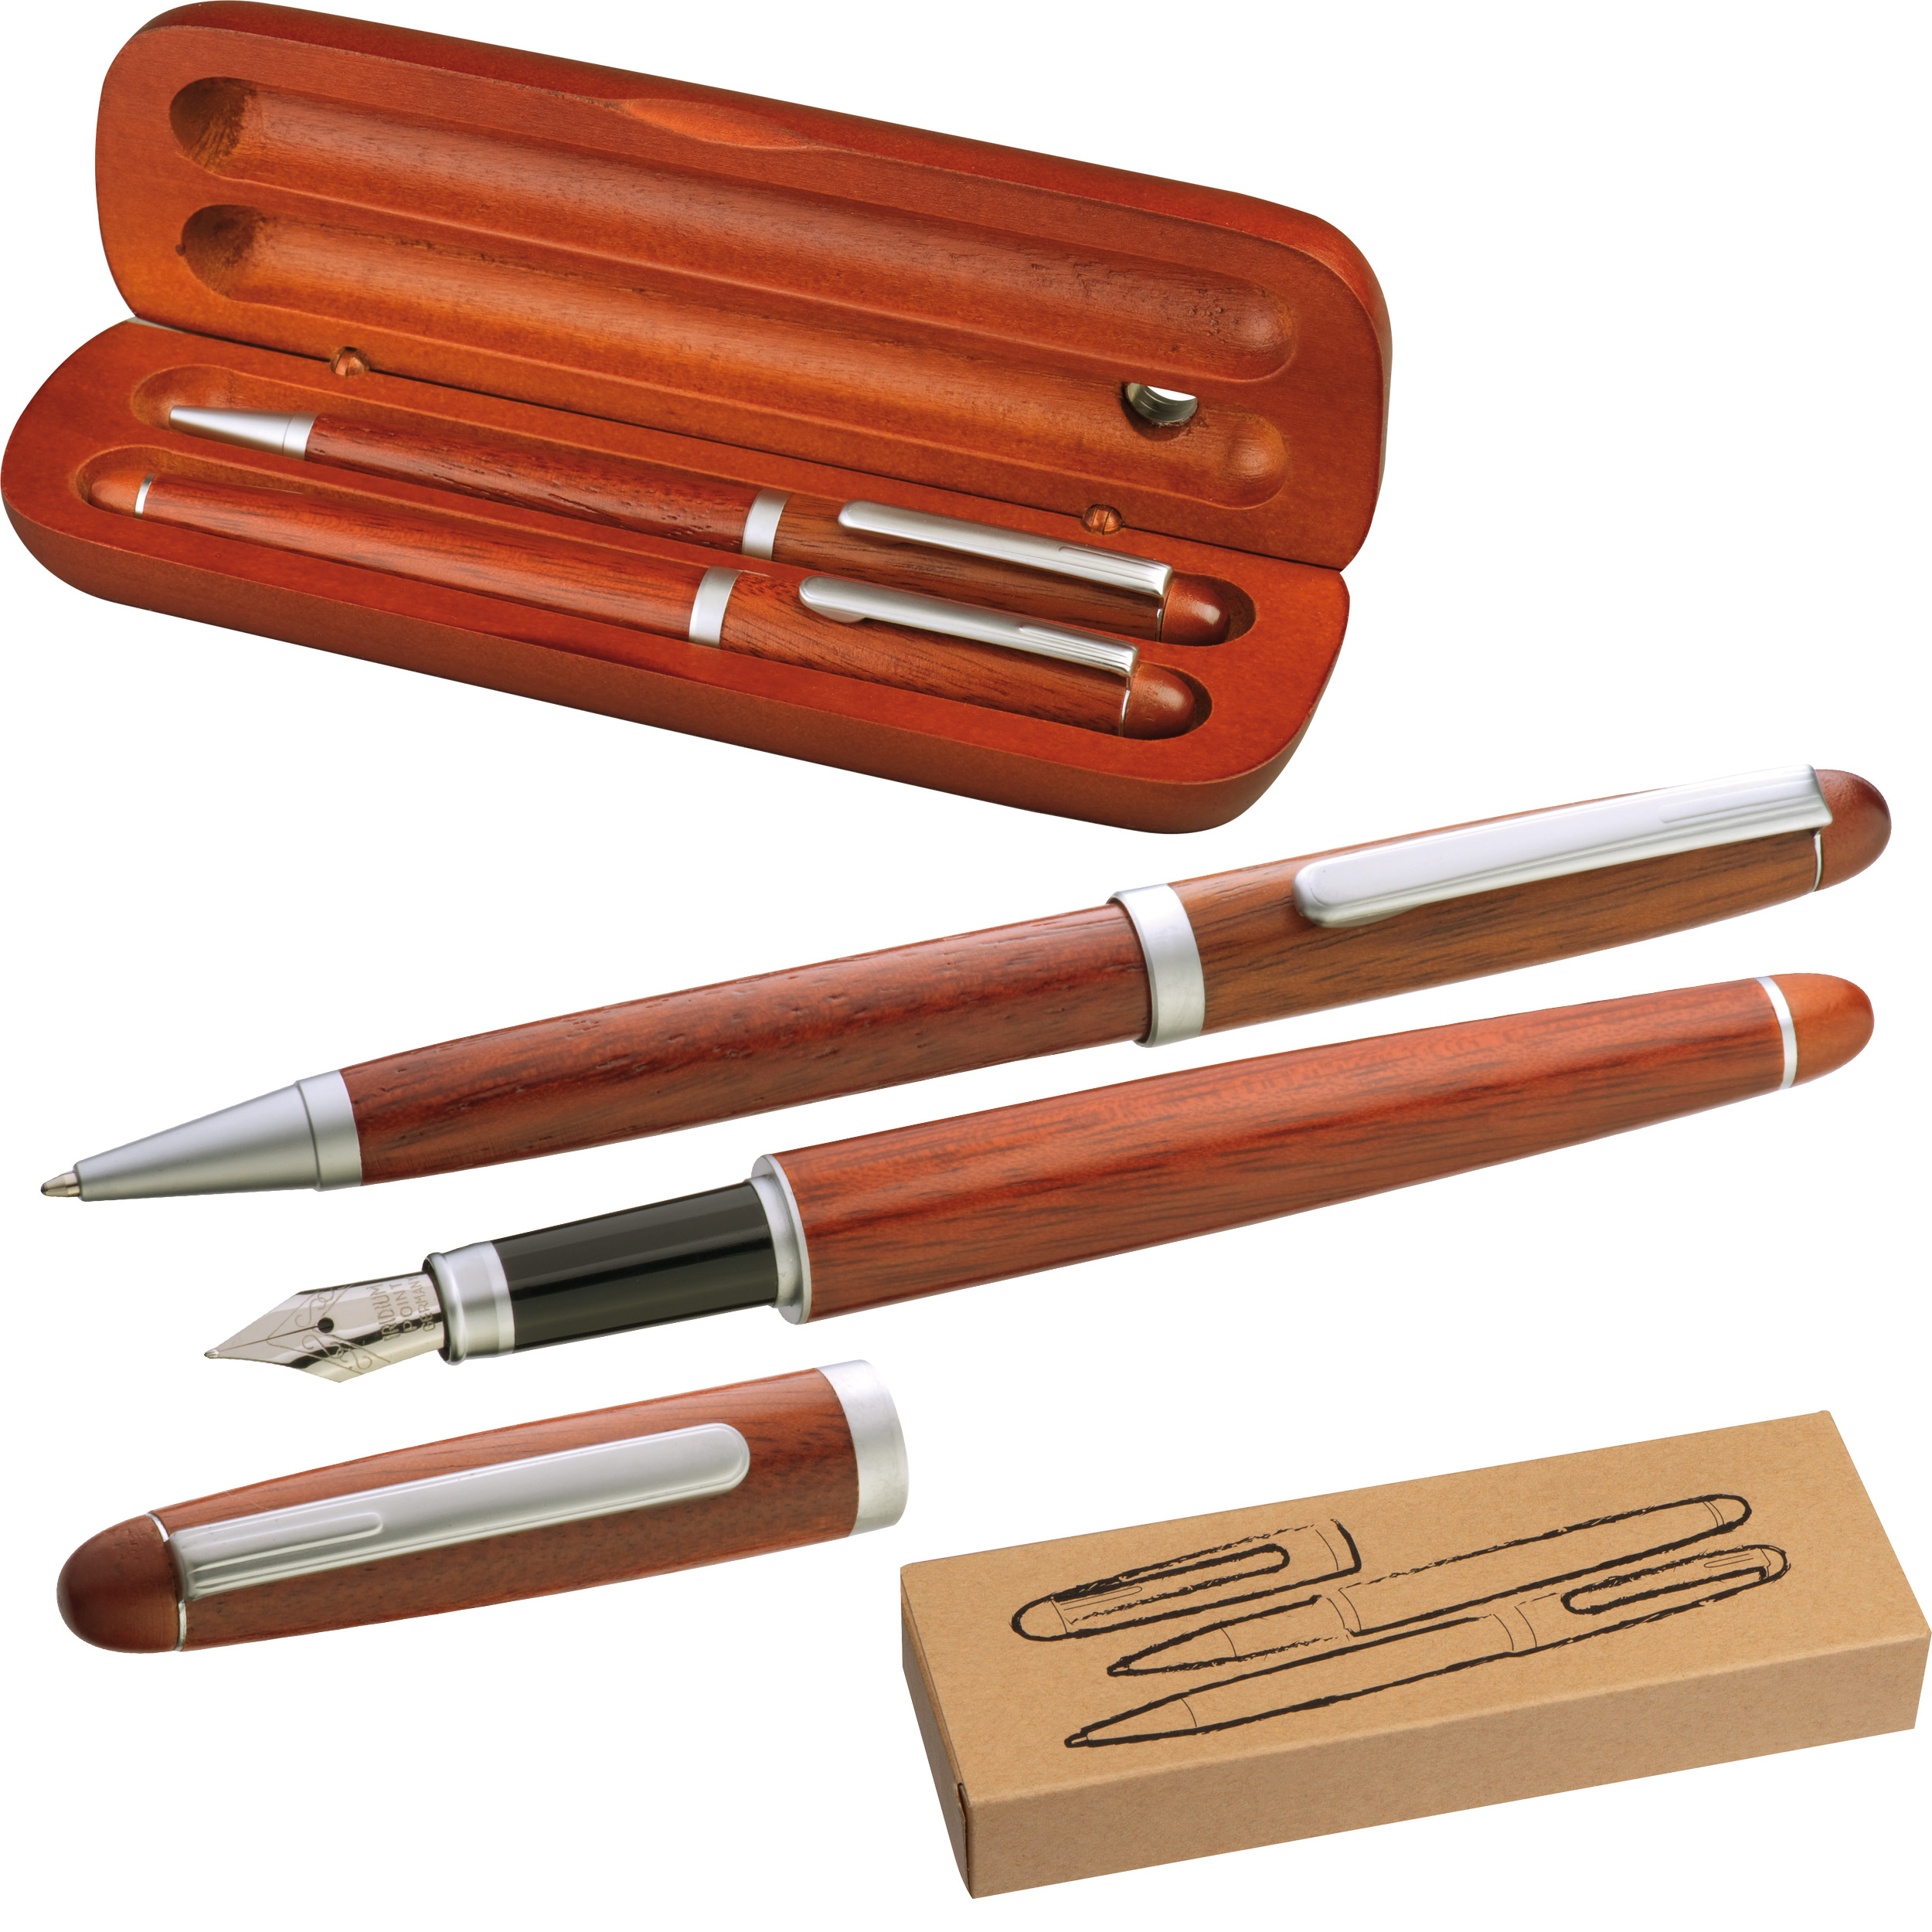 Rosewood pen set in stylish case.